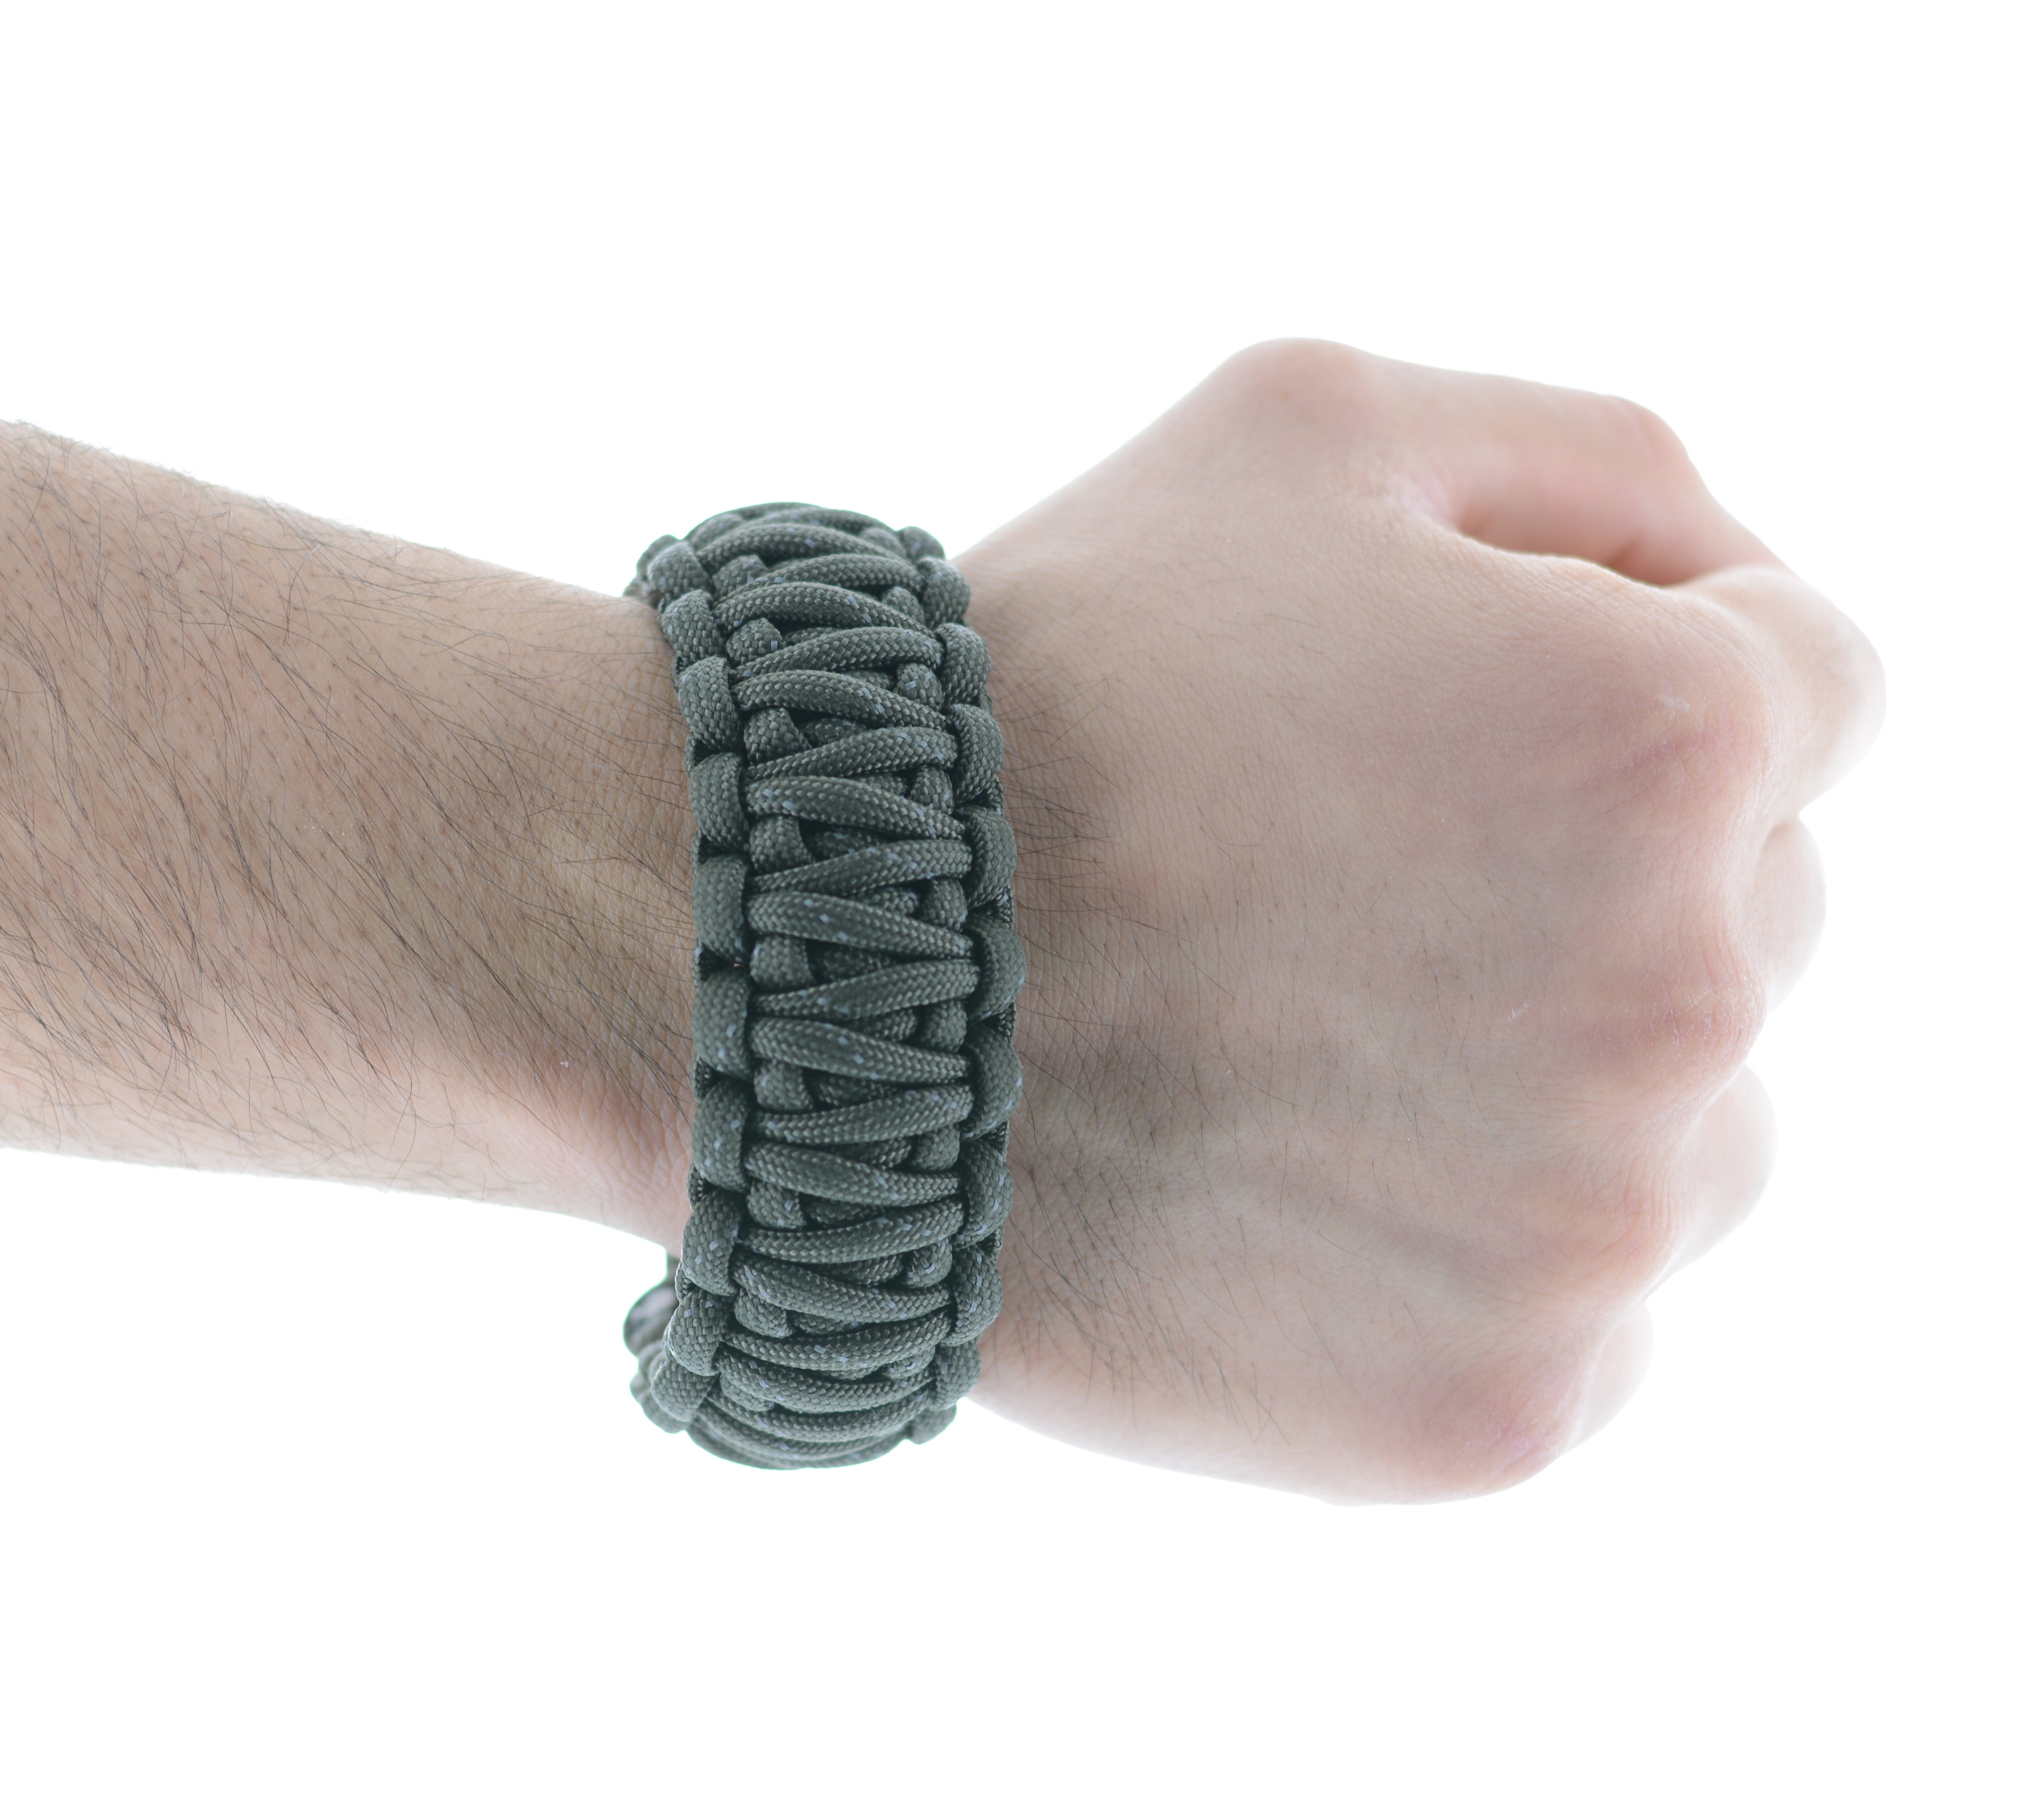 SLIM Paracord Survival Bracelet Cobra Black and Urban Camo - Etsy